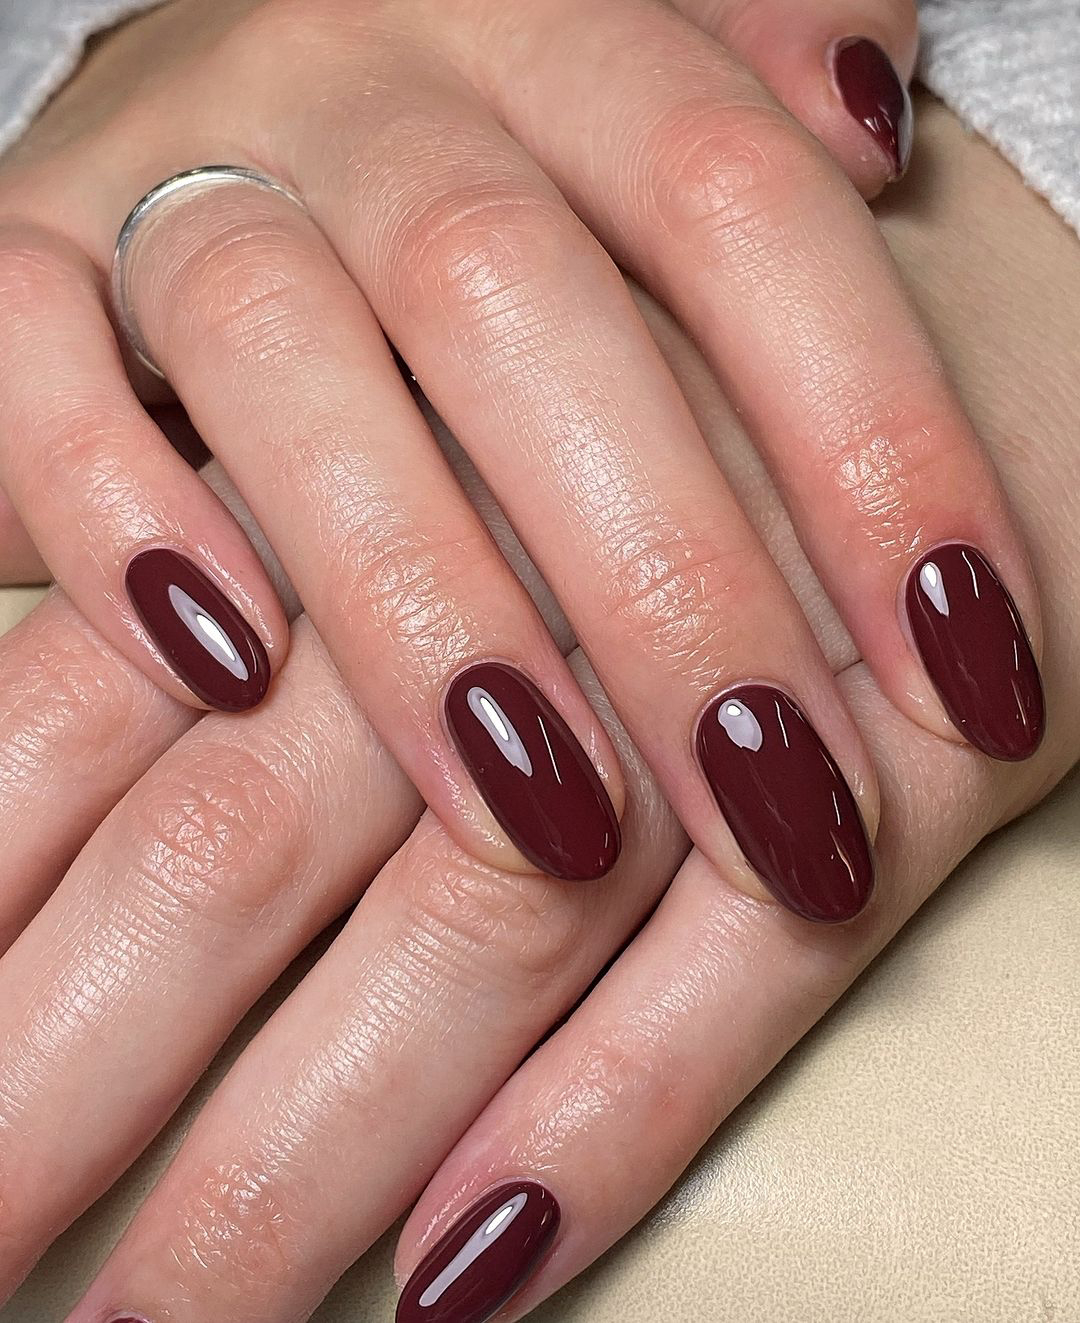 dark winter nail colors cherry cola